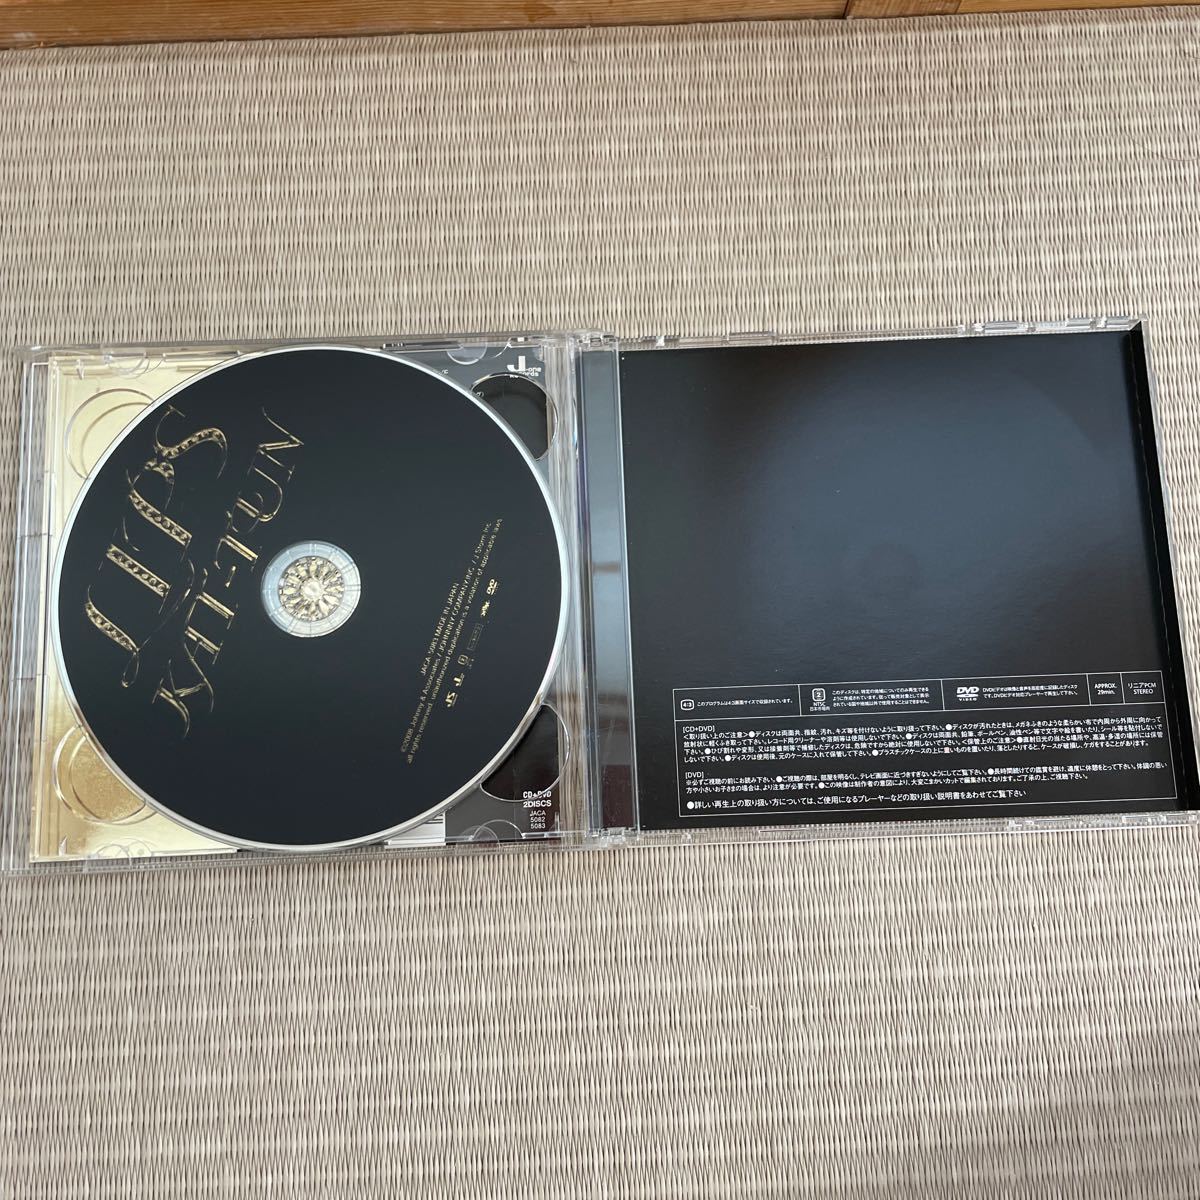  LIPS (初回限定盤) (DVD付) KAT-TUN、 Axel-G、 JOKER、 YukihideYTTakiyama